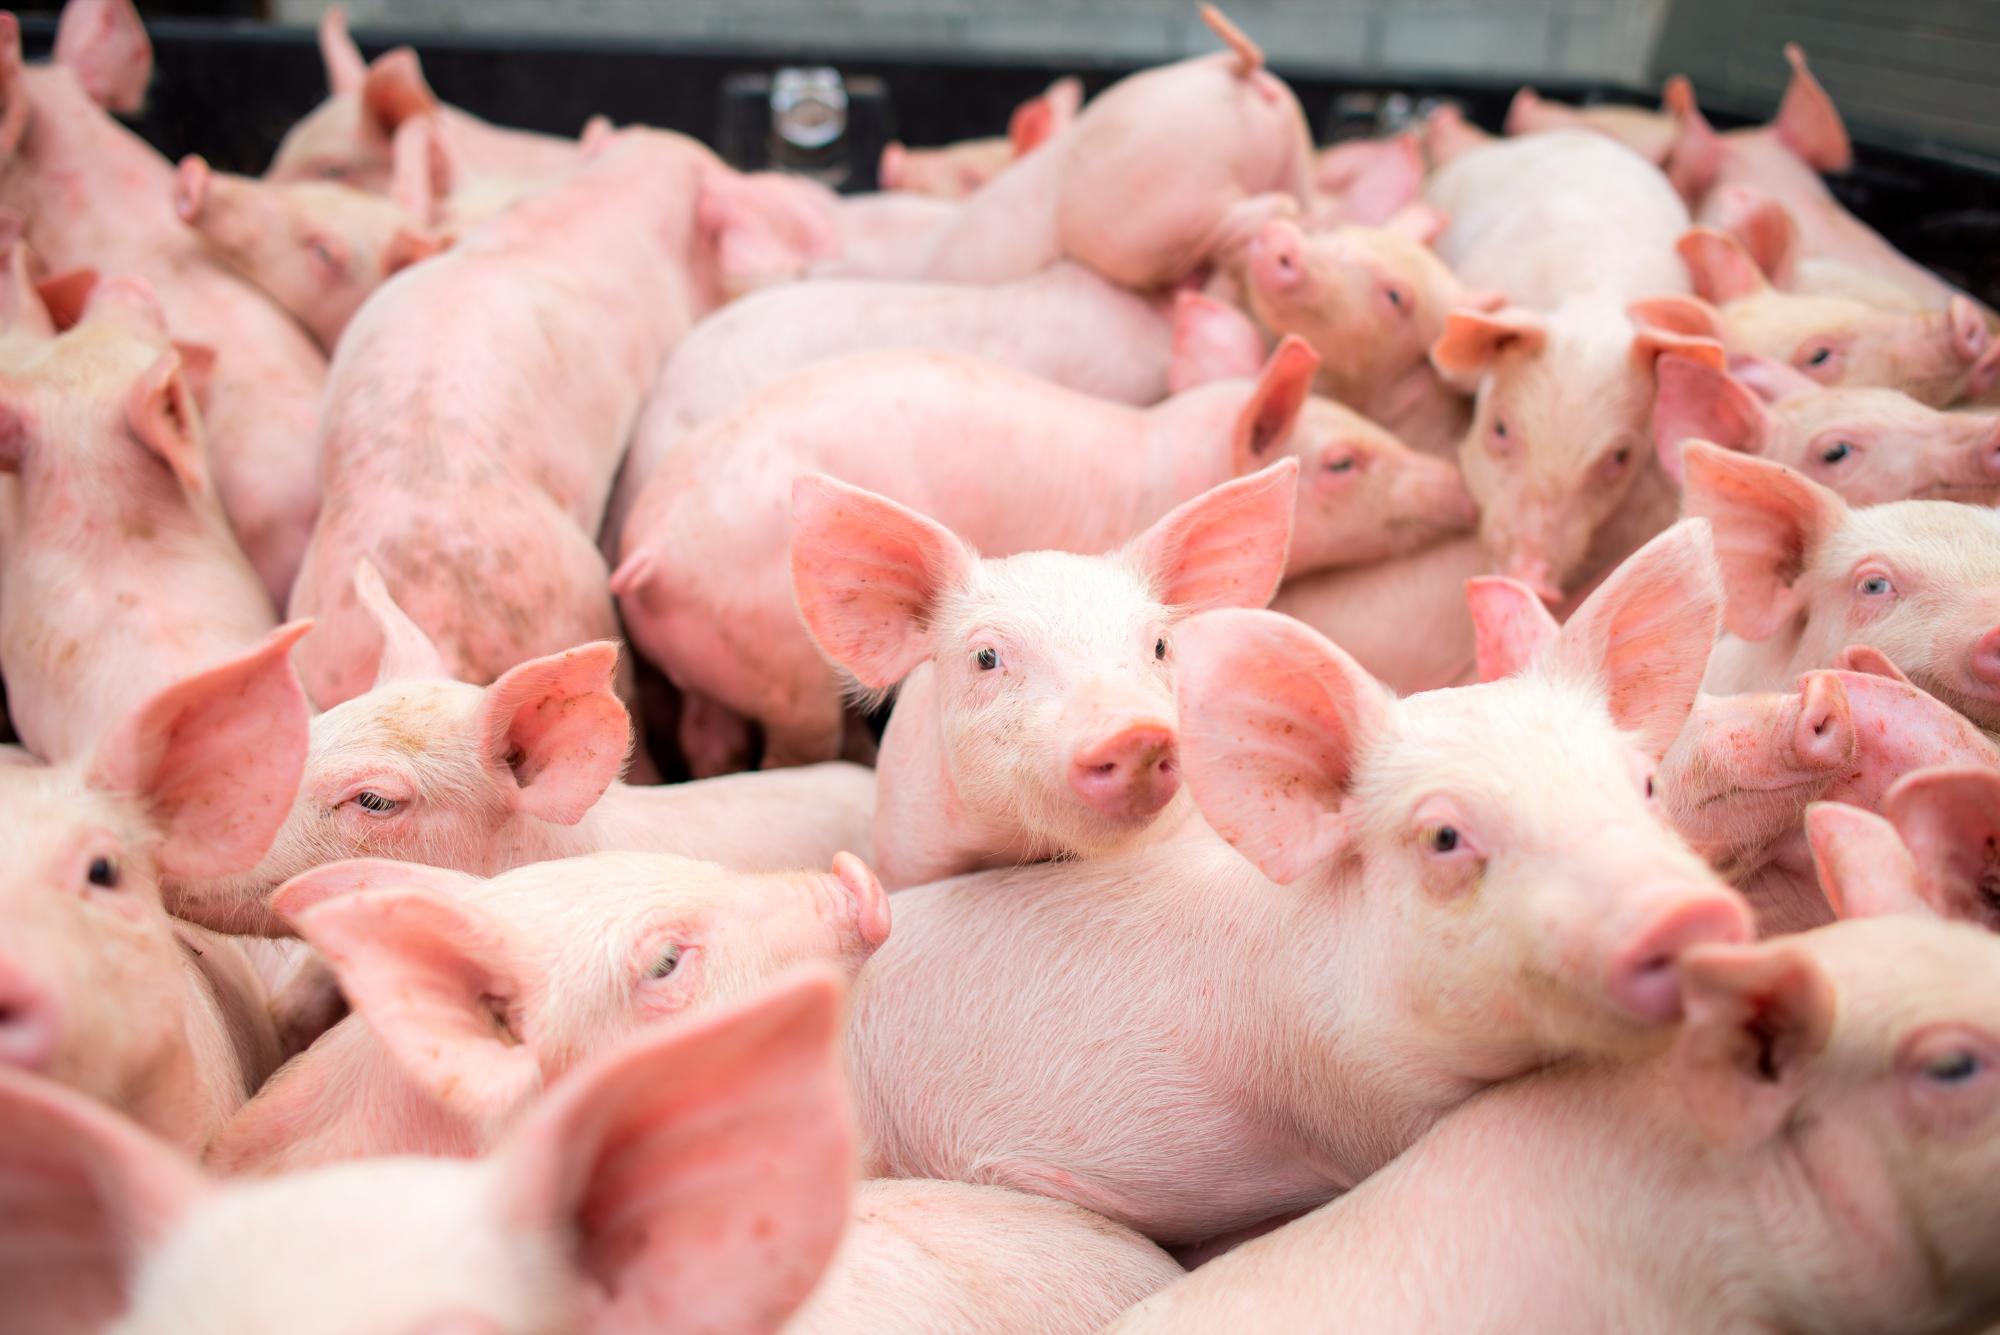 Autoridades emplazan a productores informales de cerdos a eliminar criaderos en Pedernales - Diario Libre